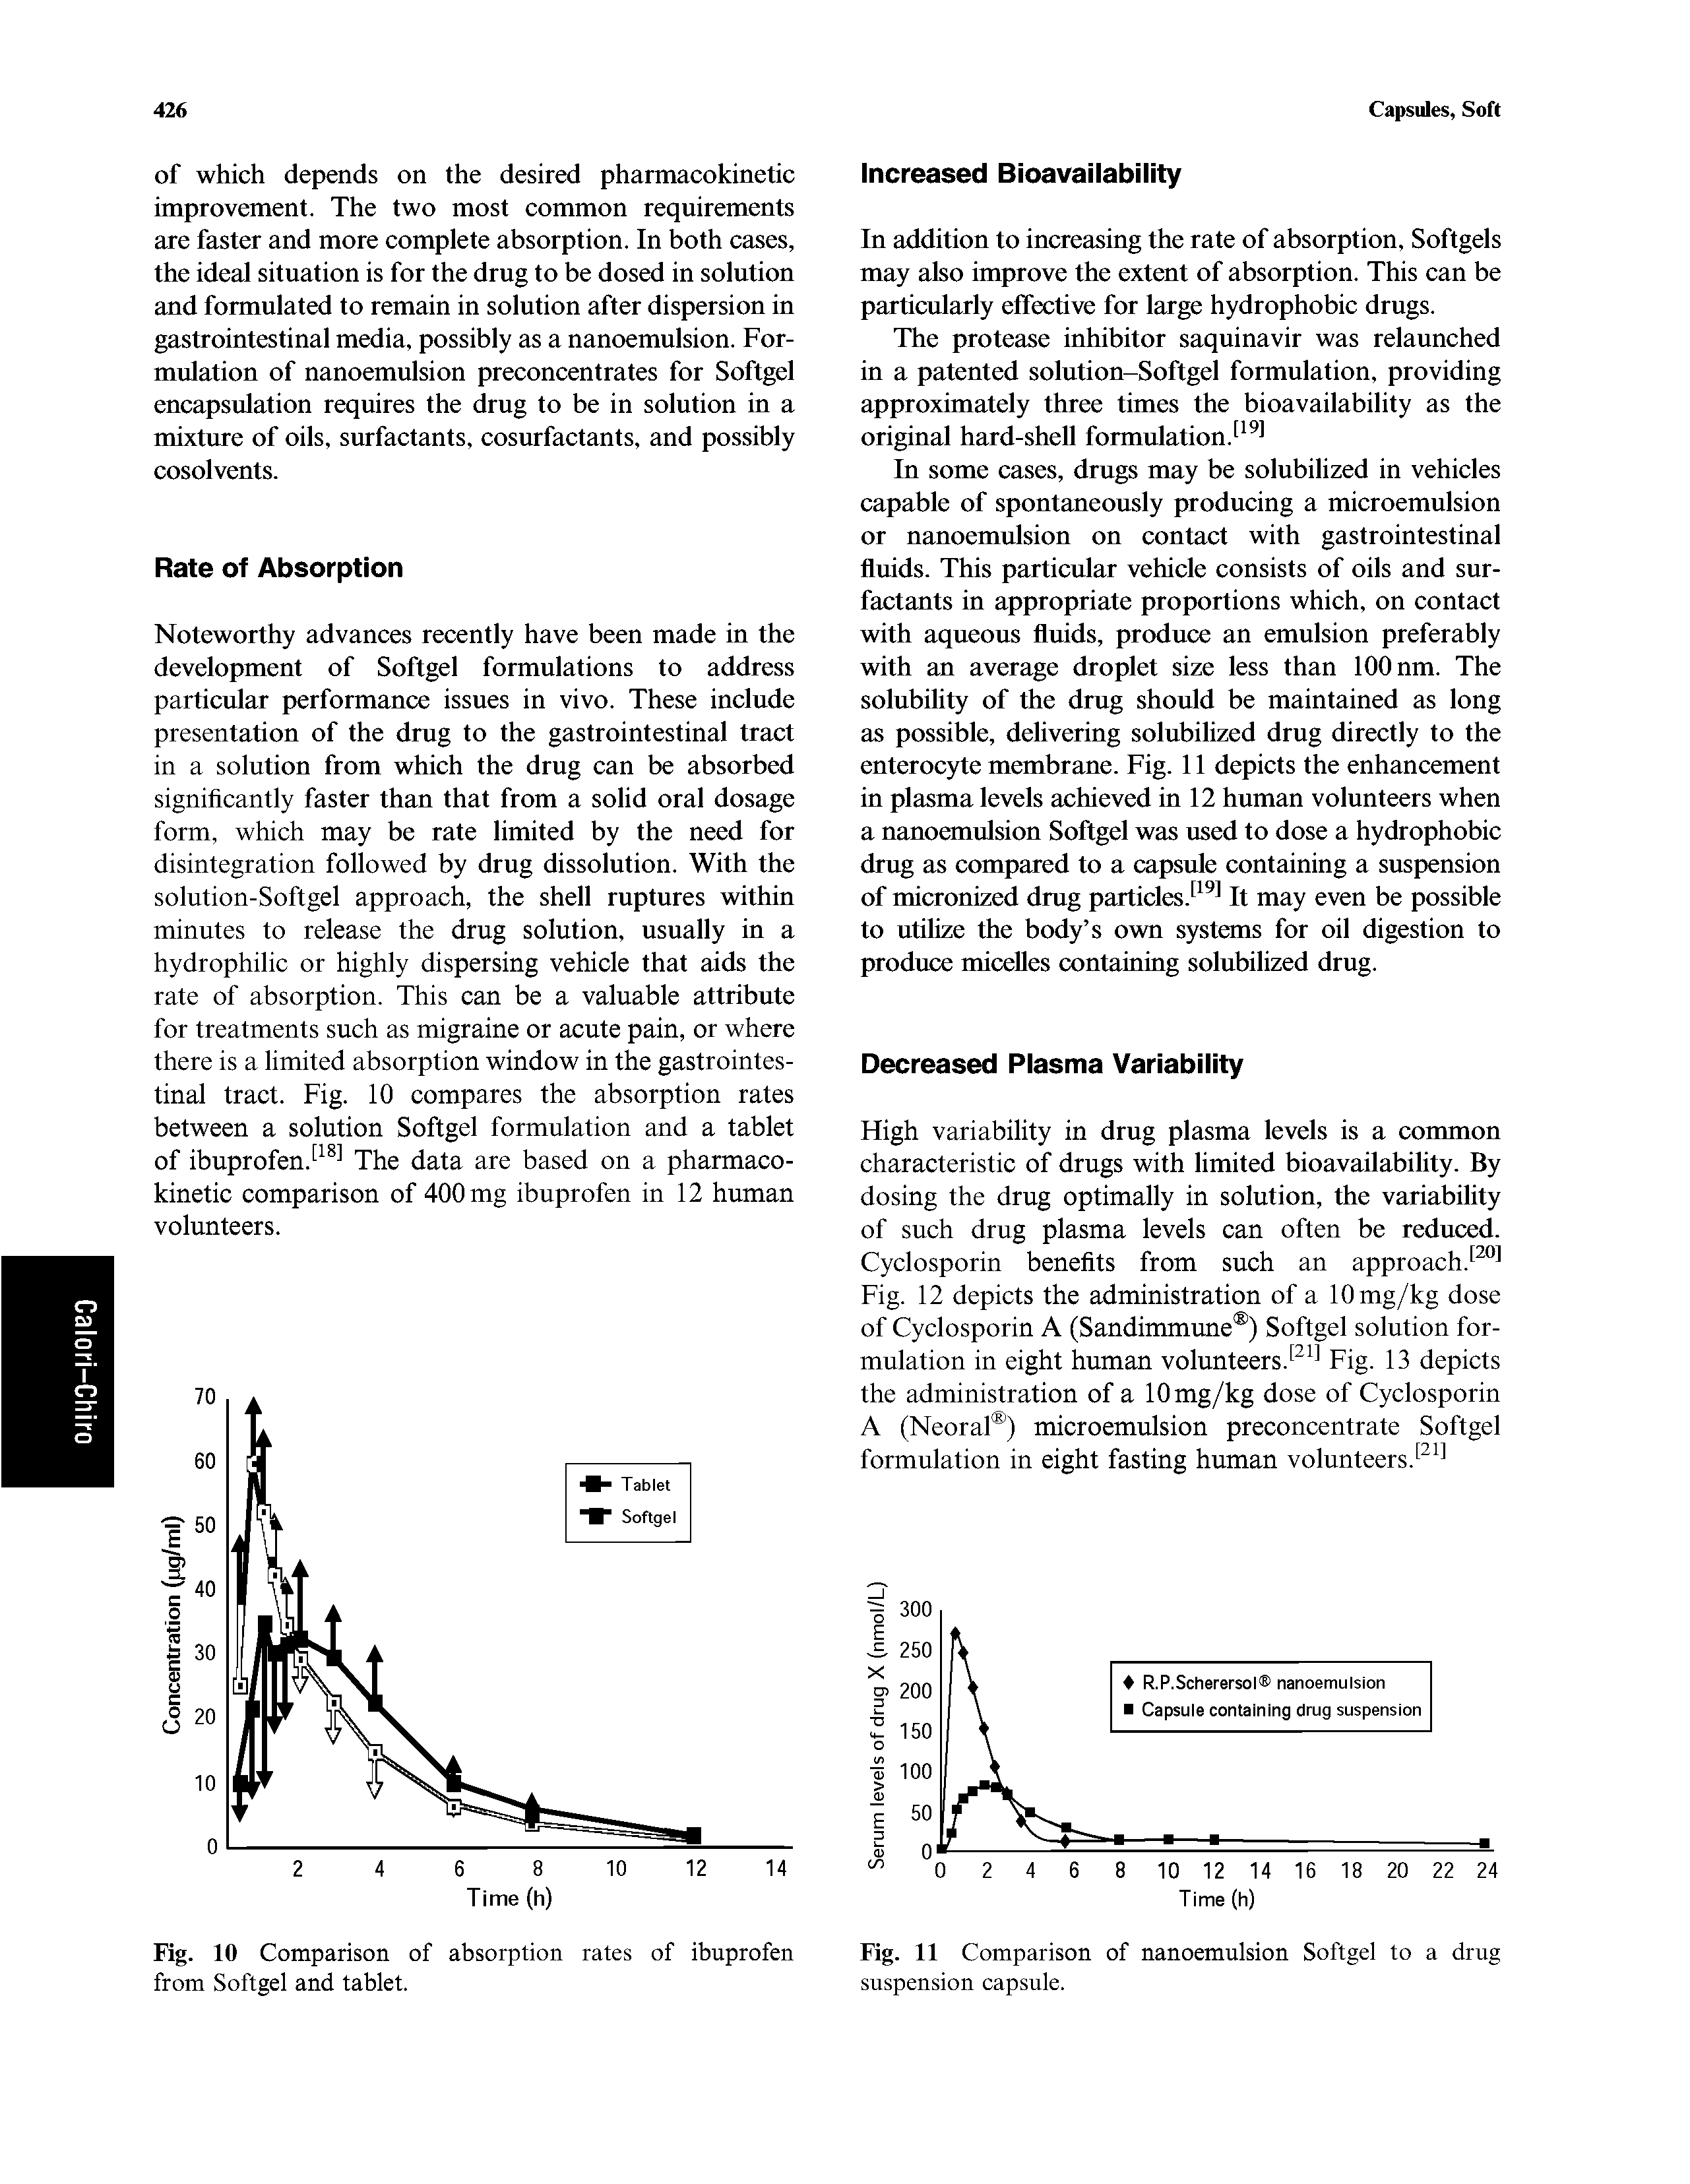 Fig. 11 Comparison of nanoemulsion Softgel to a drug suspension capsule.